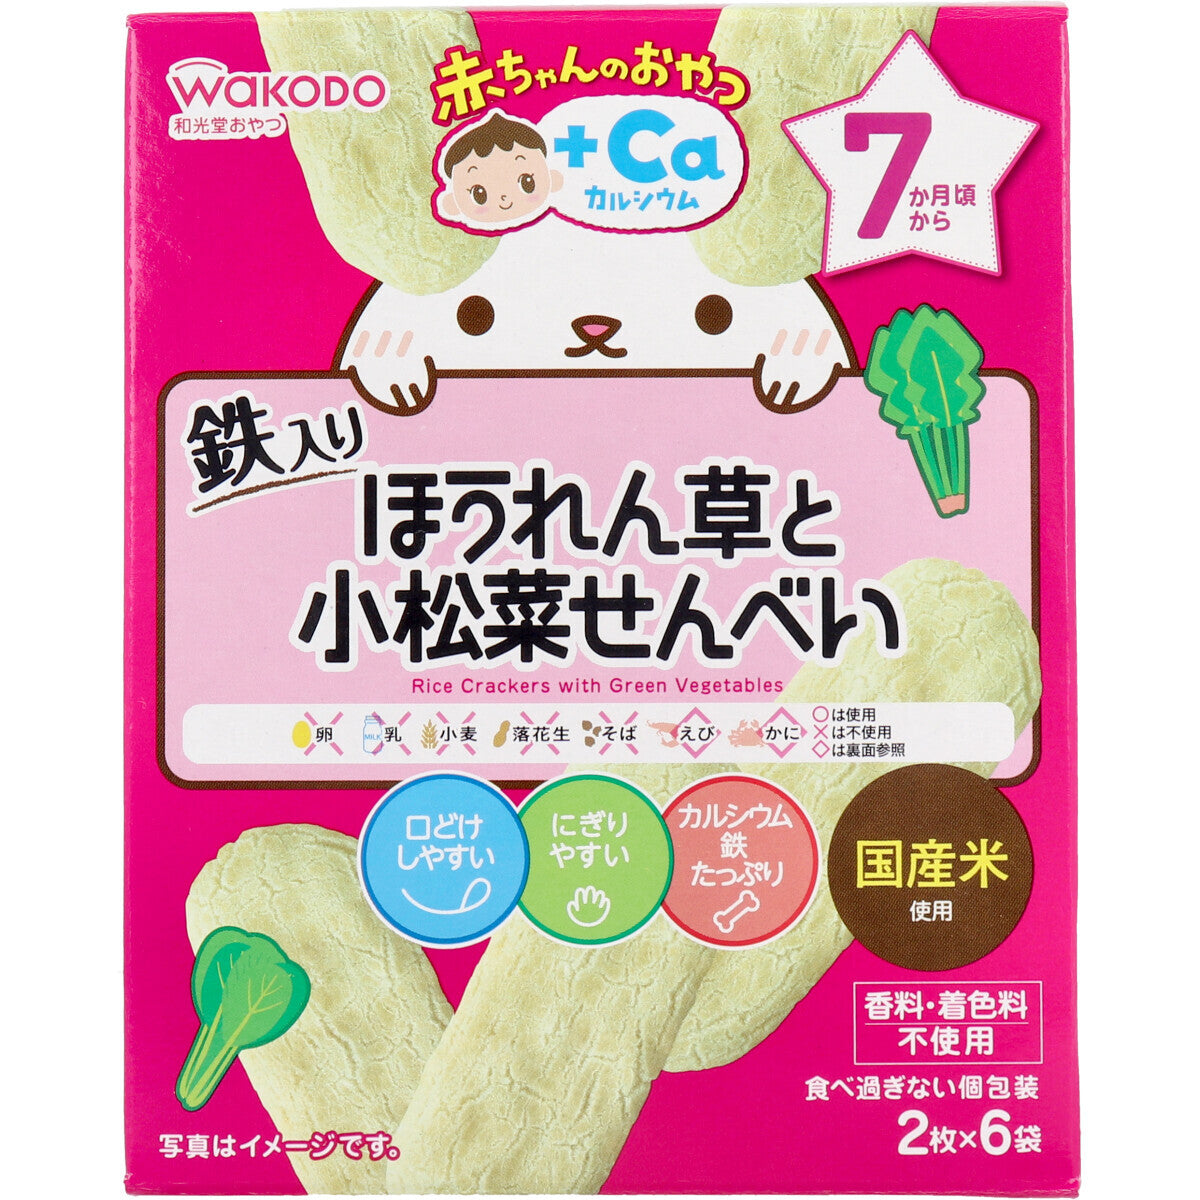 Wakodo - Baby Snacks + Ca Spinach and Komatsuna Senbei Teether Biscuit 2 pieces x 6 bags